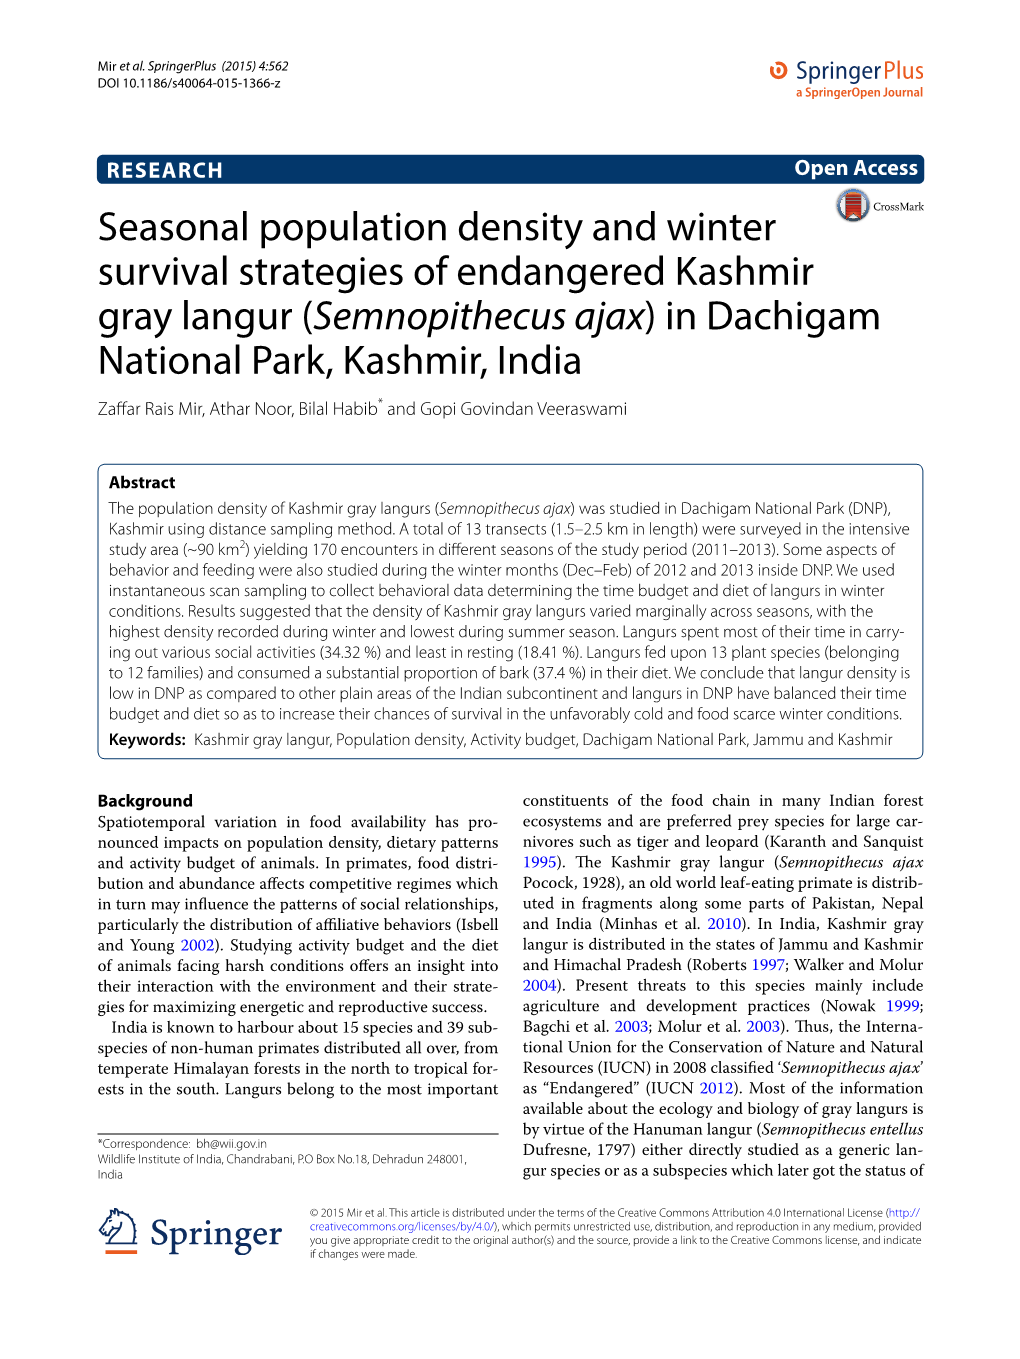 Seasonal Population Density and Winter Survival Strategies Of